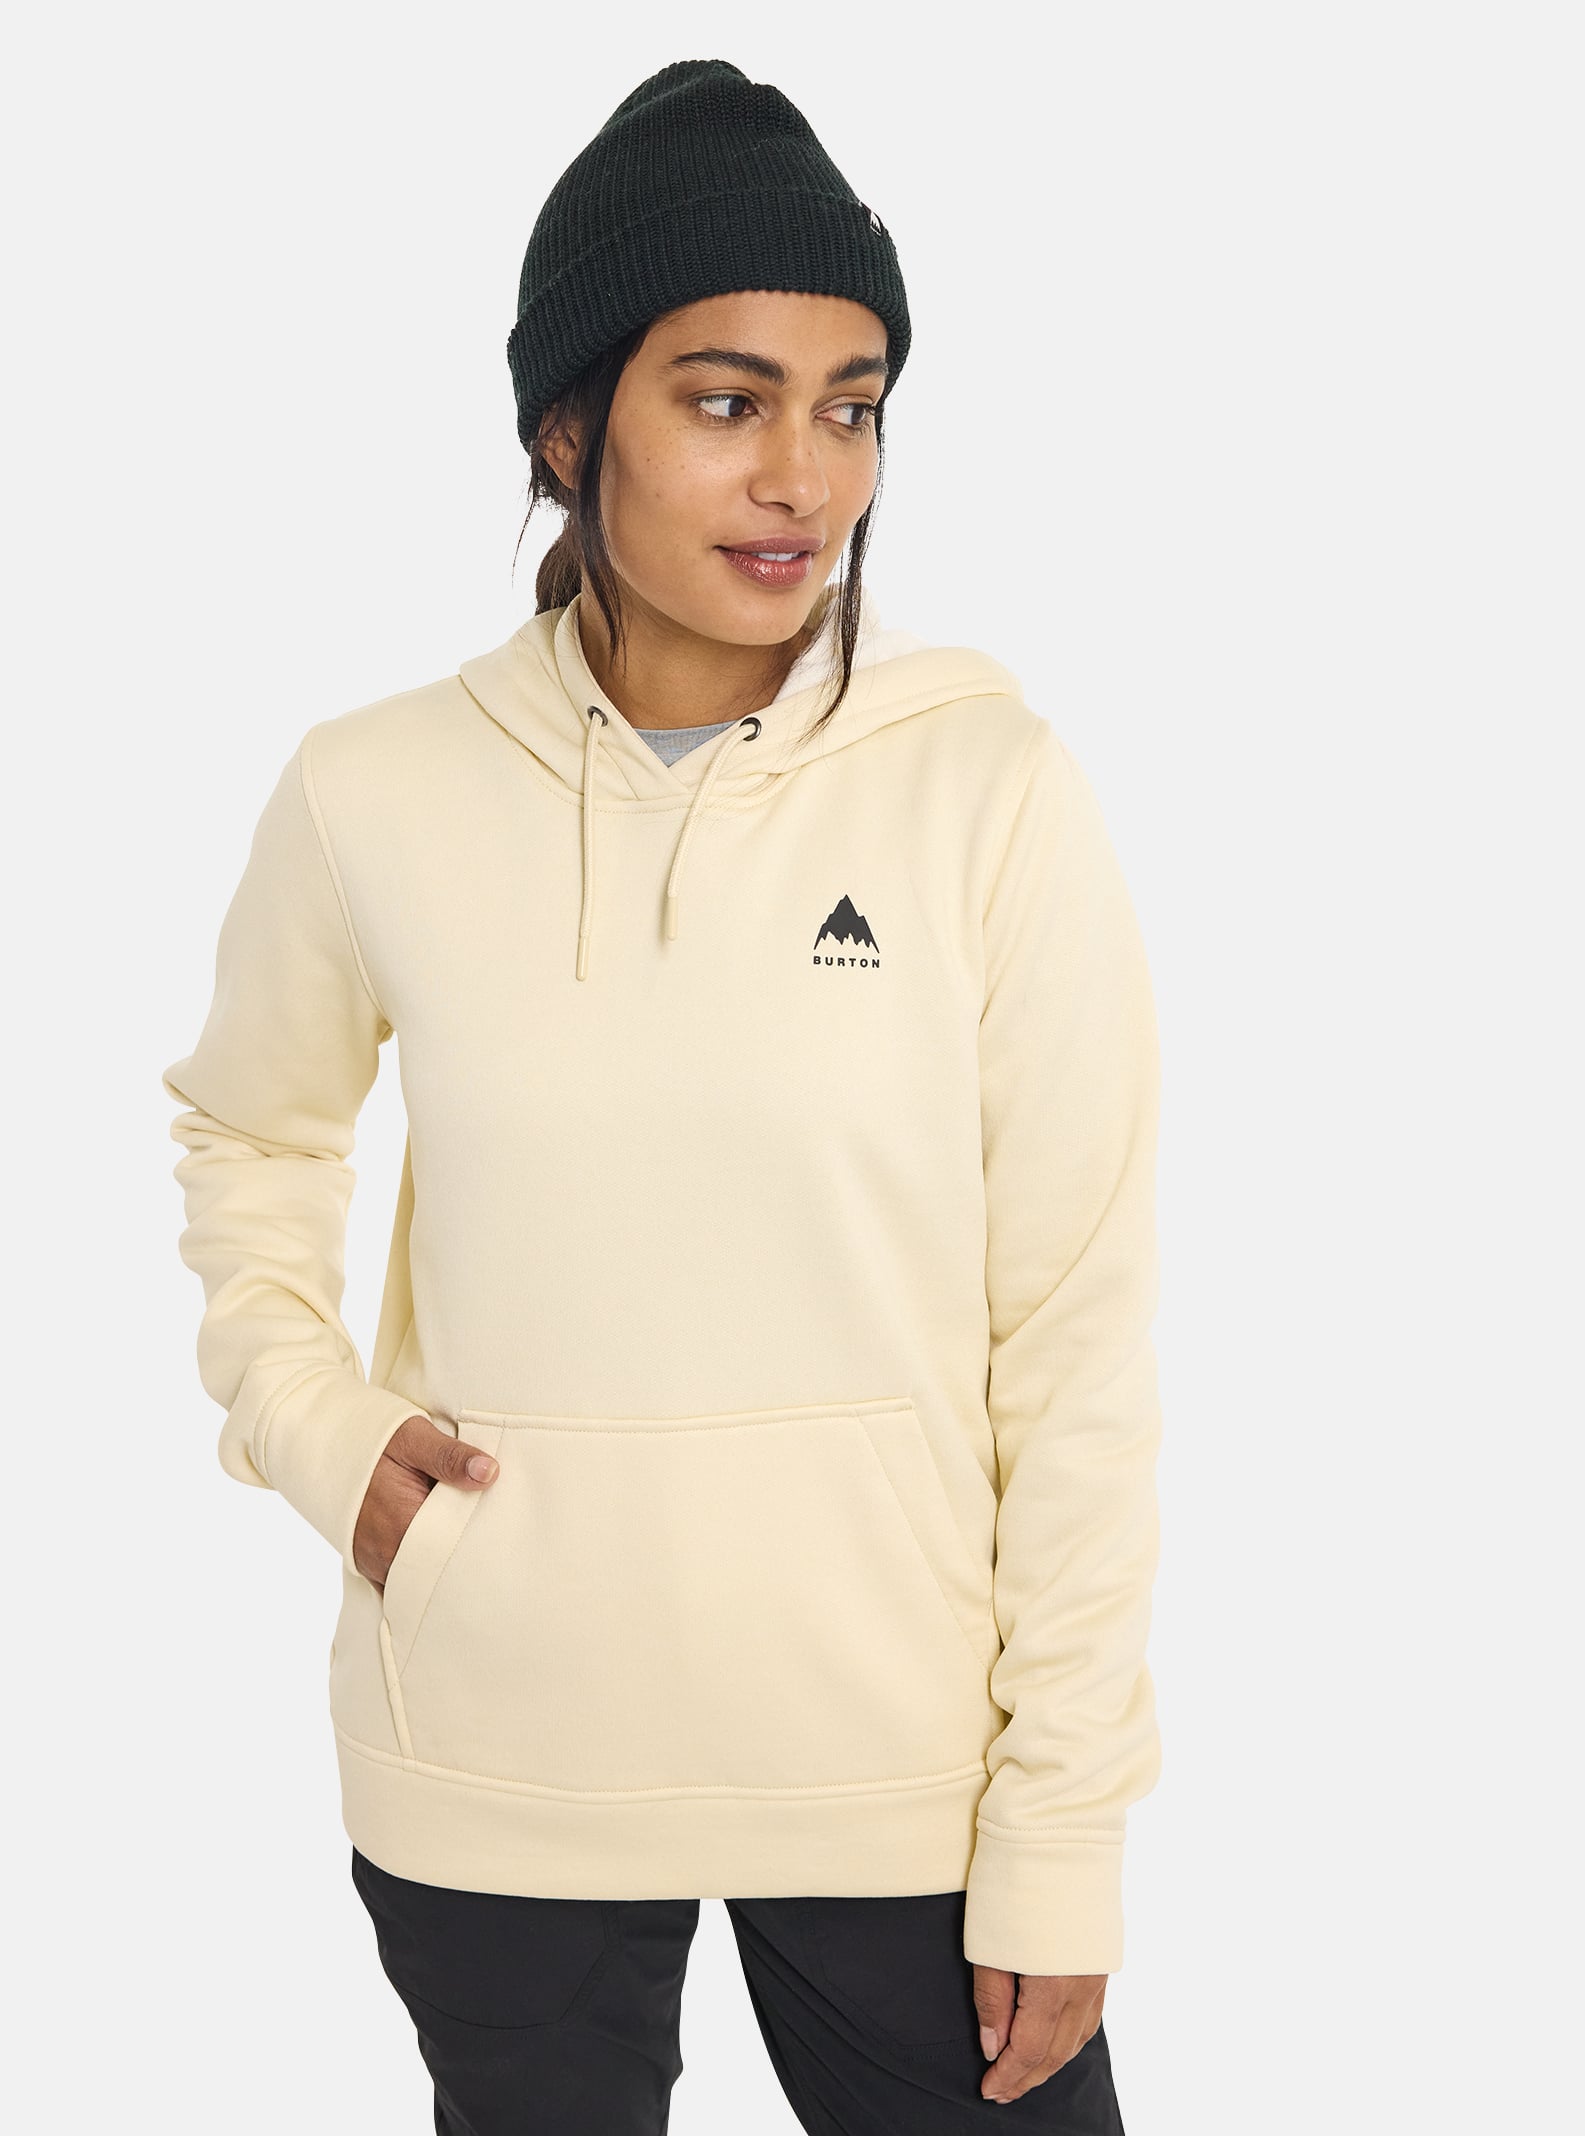 Women's Hoodies & Sweatshirts | Burton Snowboards GB